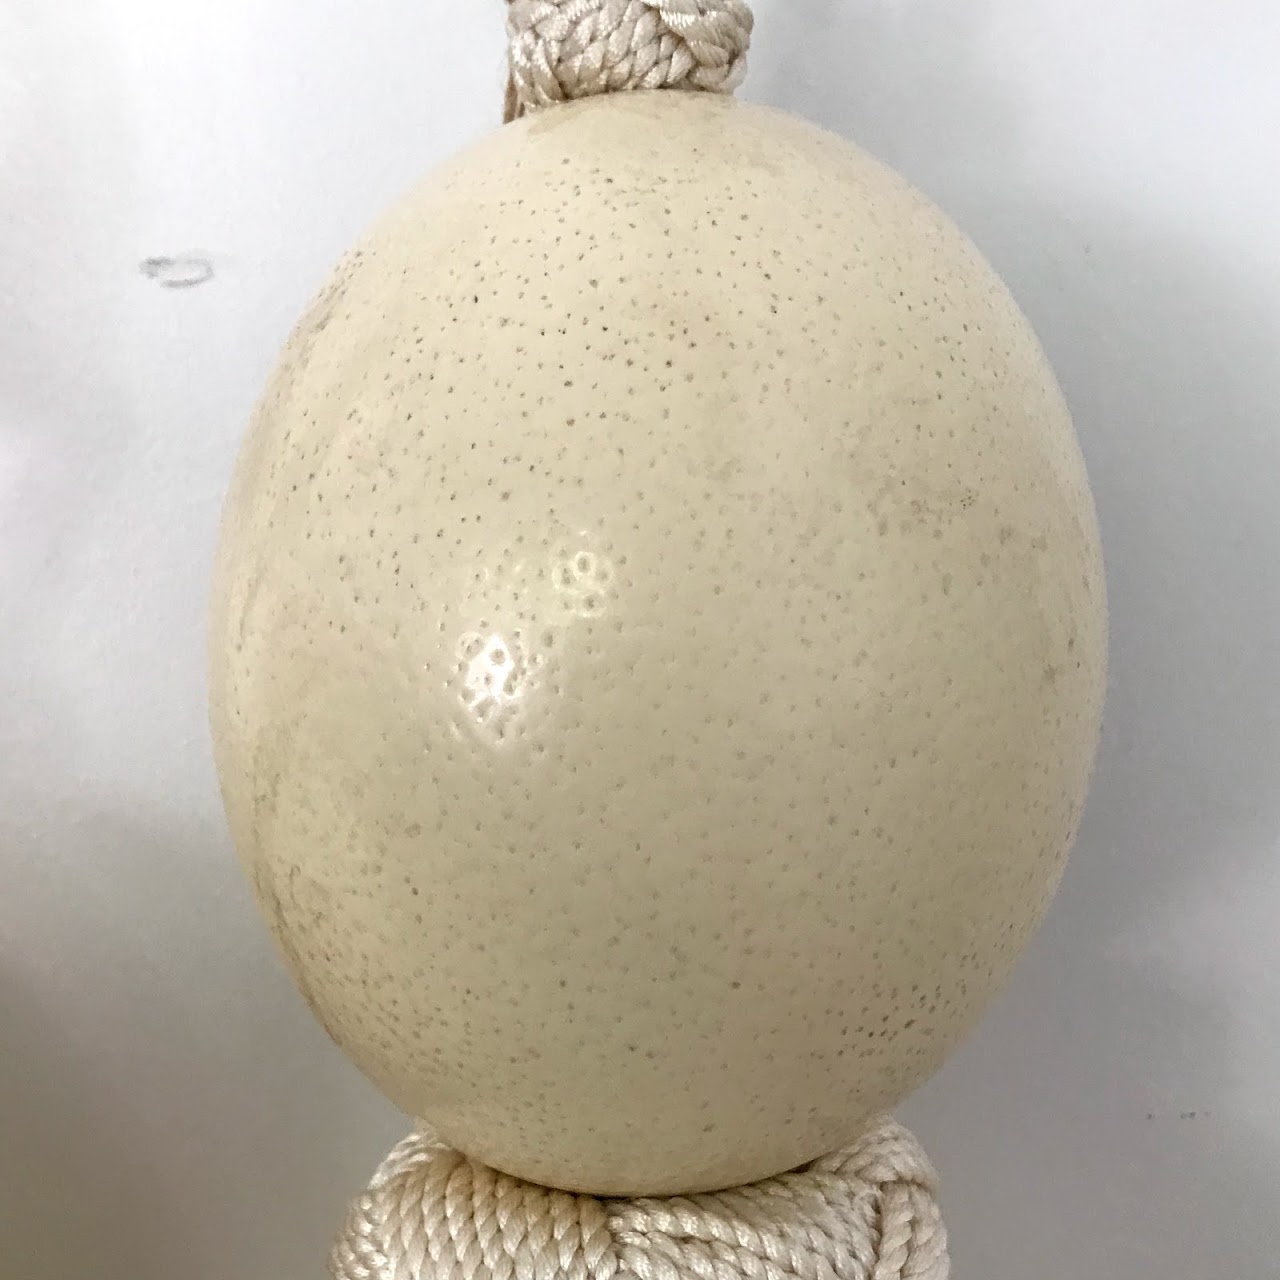 French Ostrich Egg & Silk 48” Drapery Tassel Pair